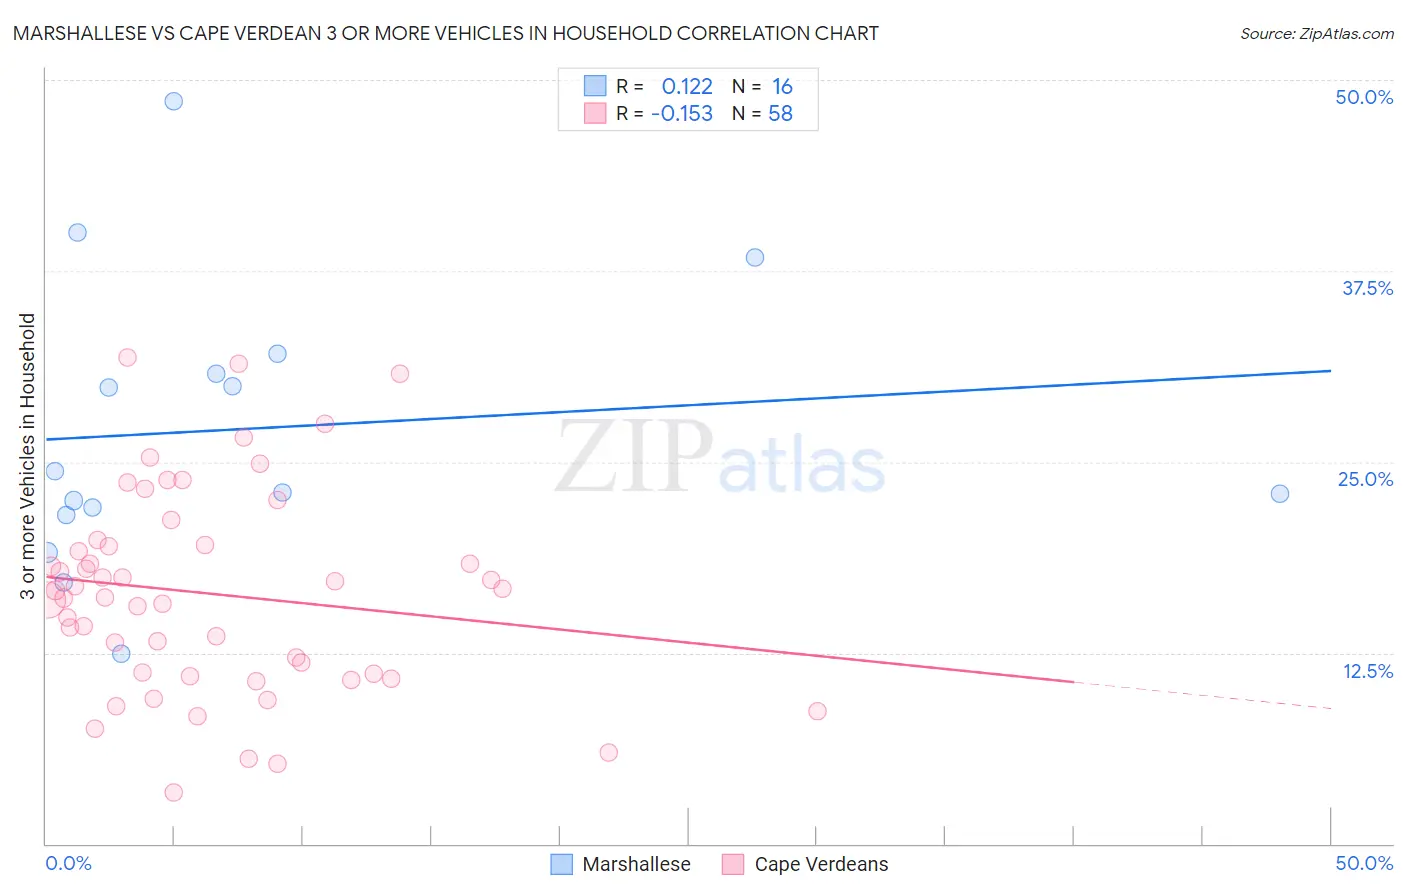 Marshallese vs Cape Verdean 3 or more Vehicles in Household